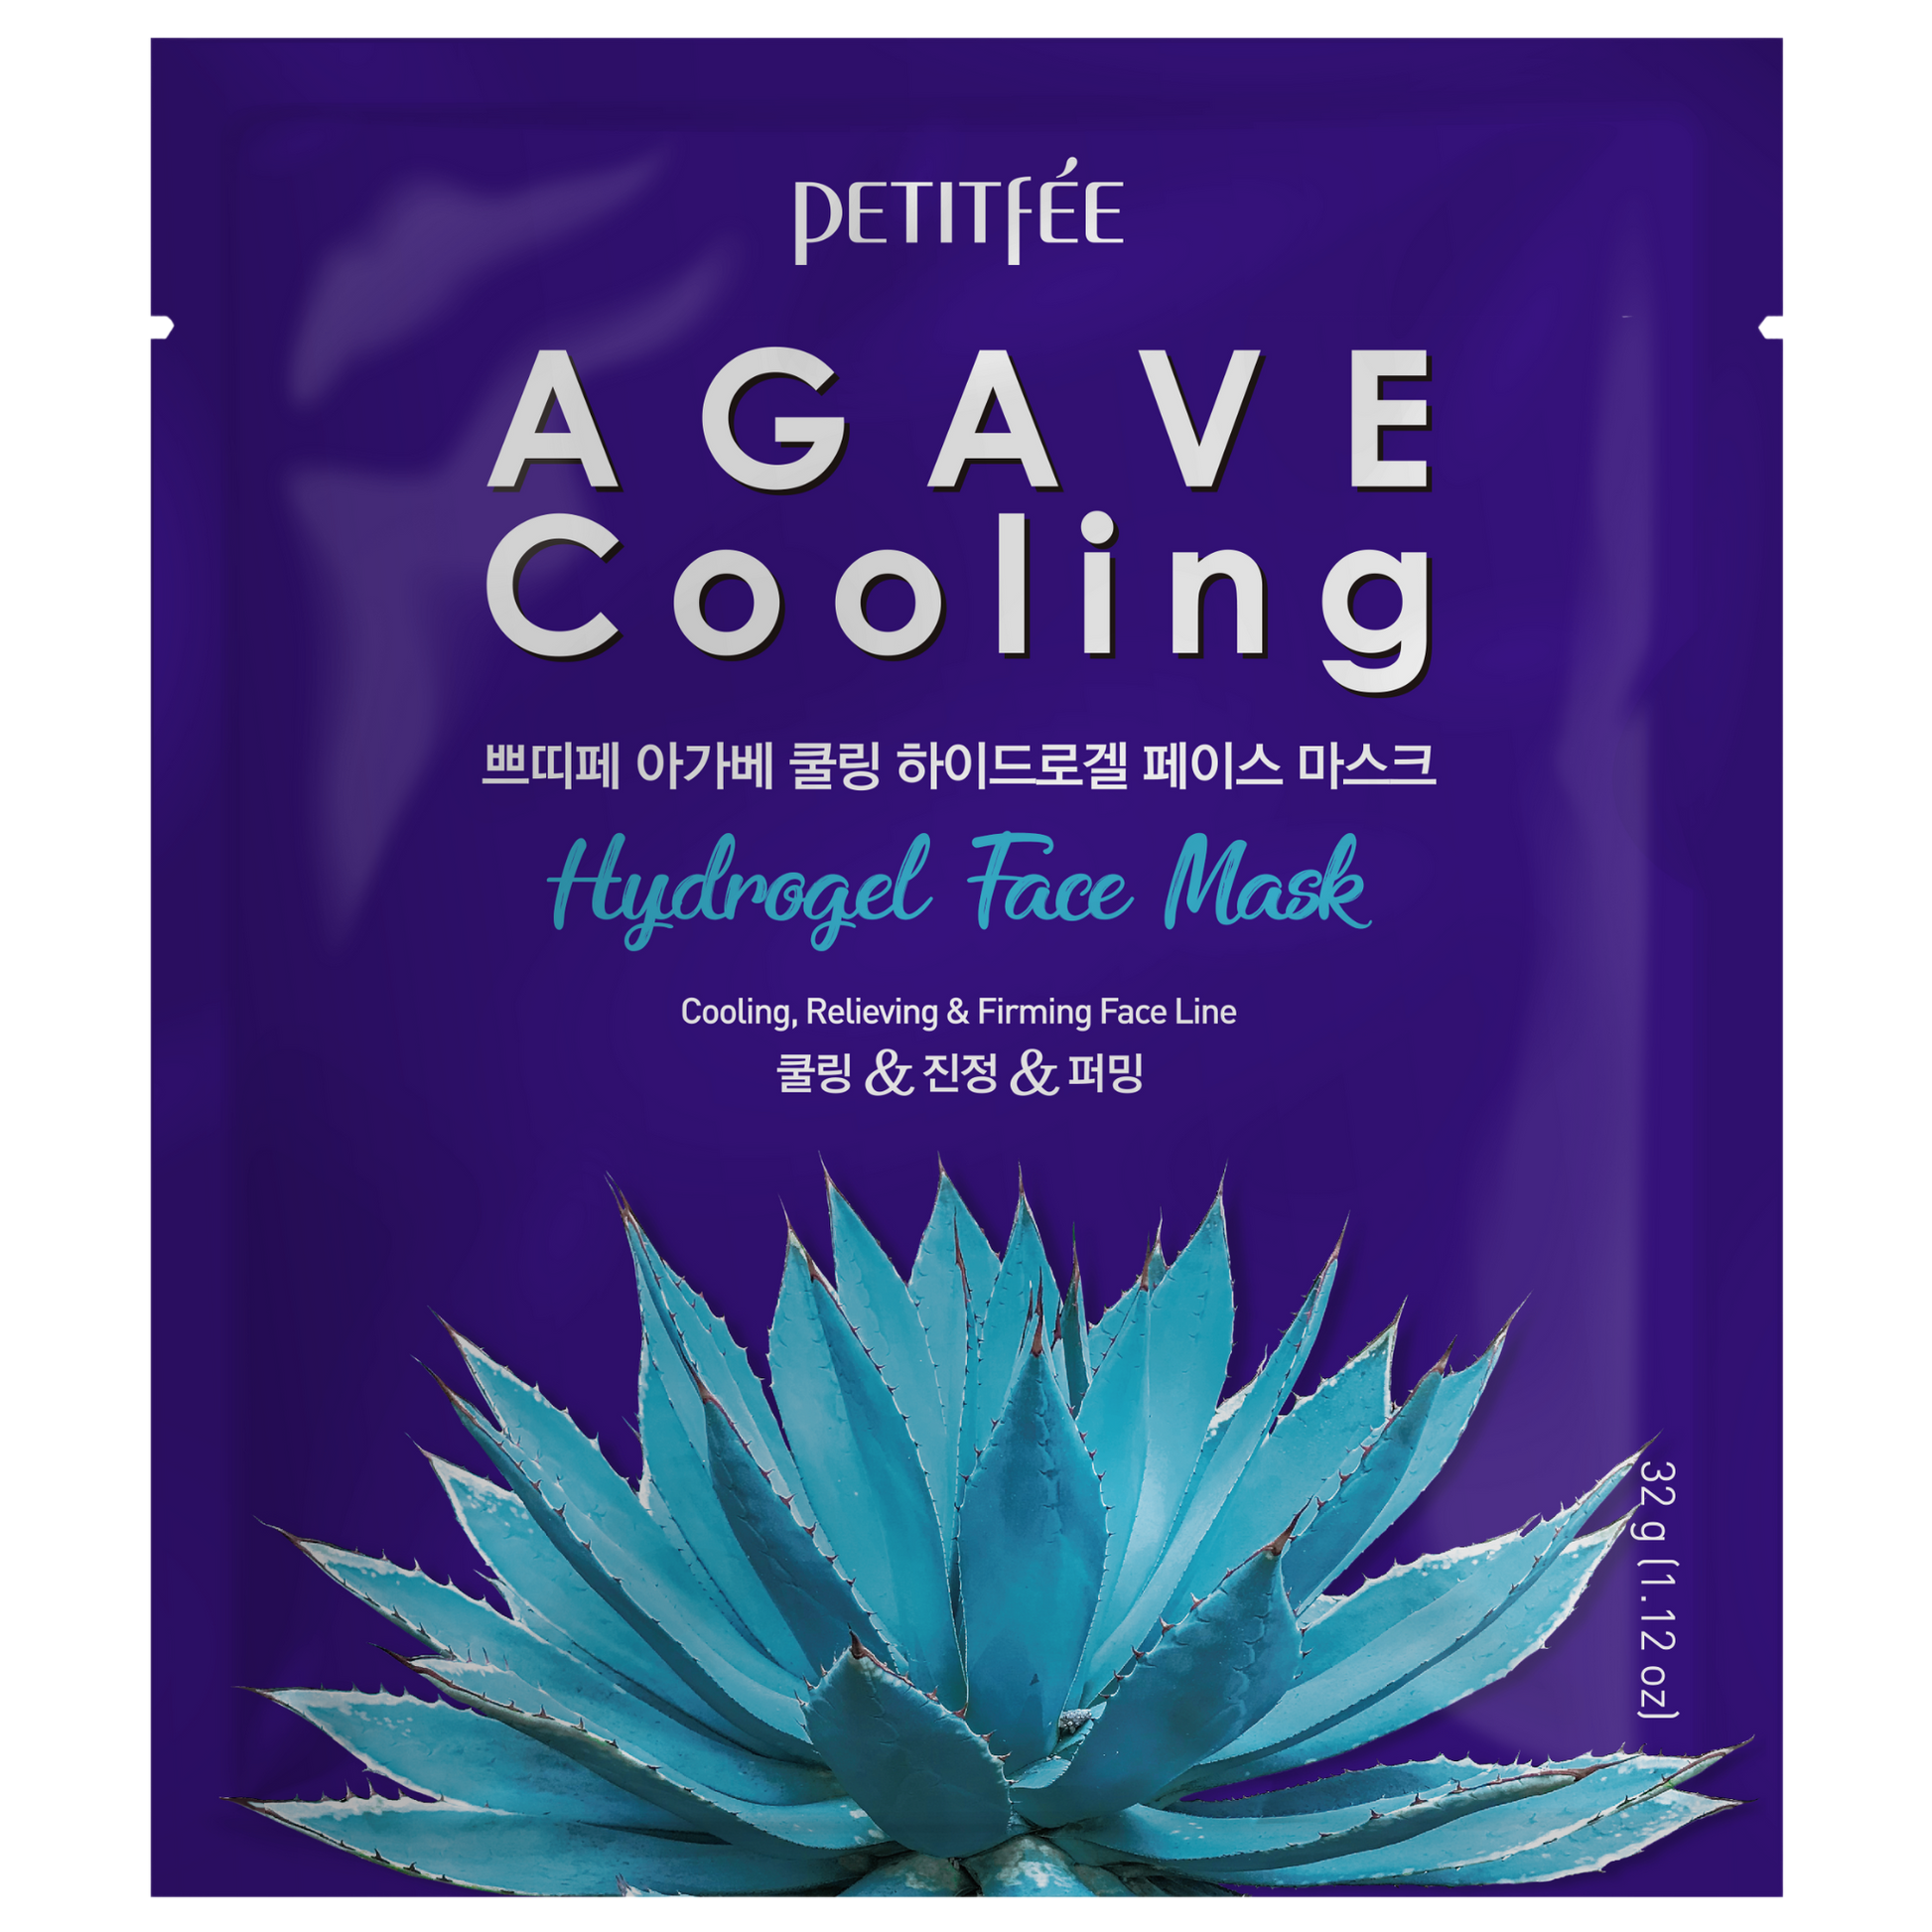 Petitfee Agave Cooling Hydrogel Face Mask (1stk) - KaRebeauty